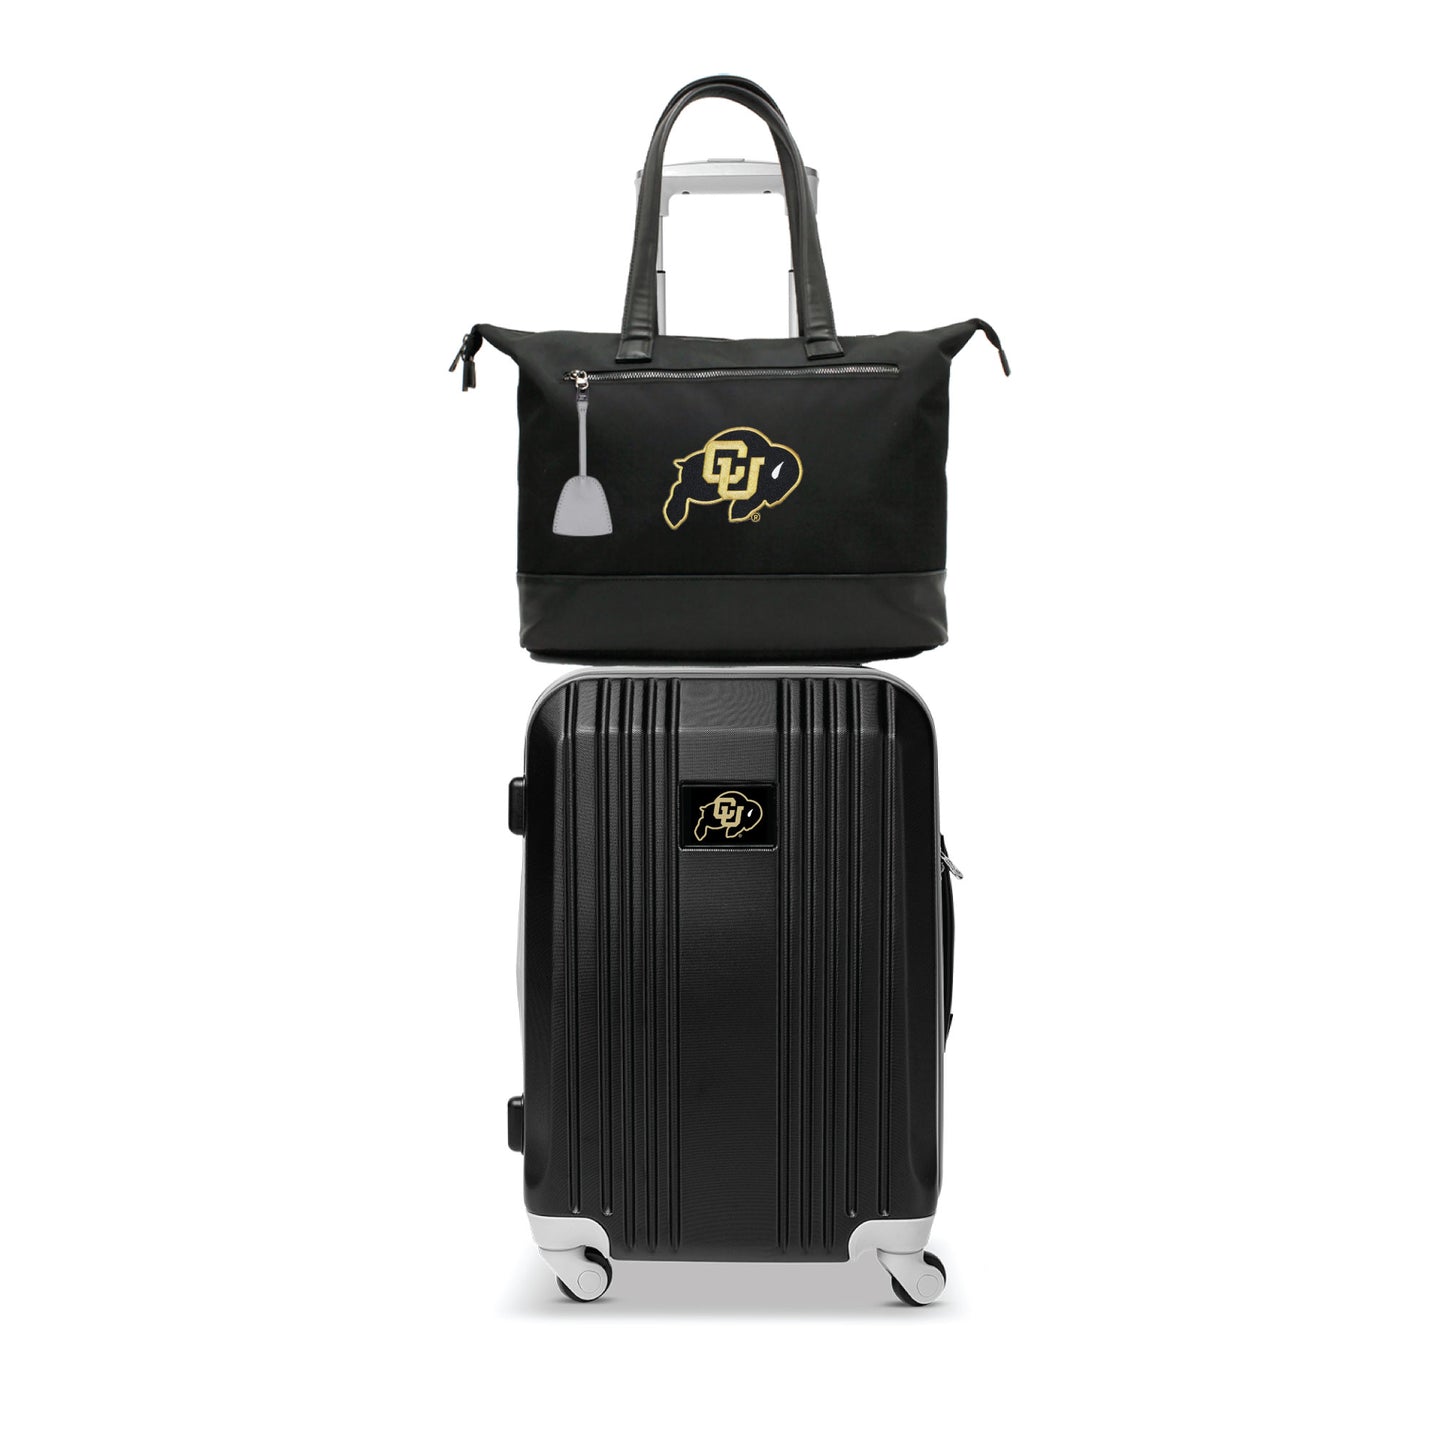 Colorado Buffaloes Premium Laptop Tote Bag and Luggage Set